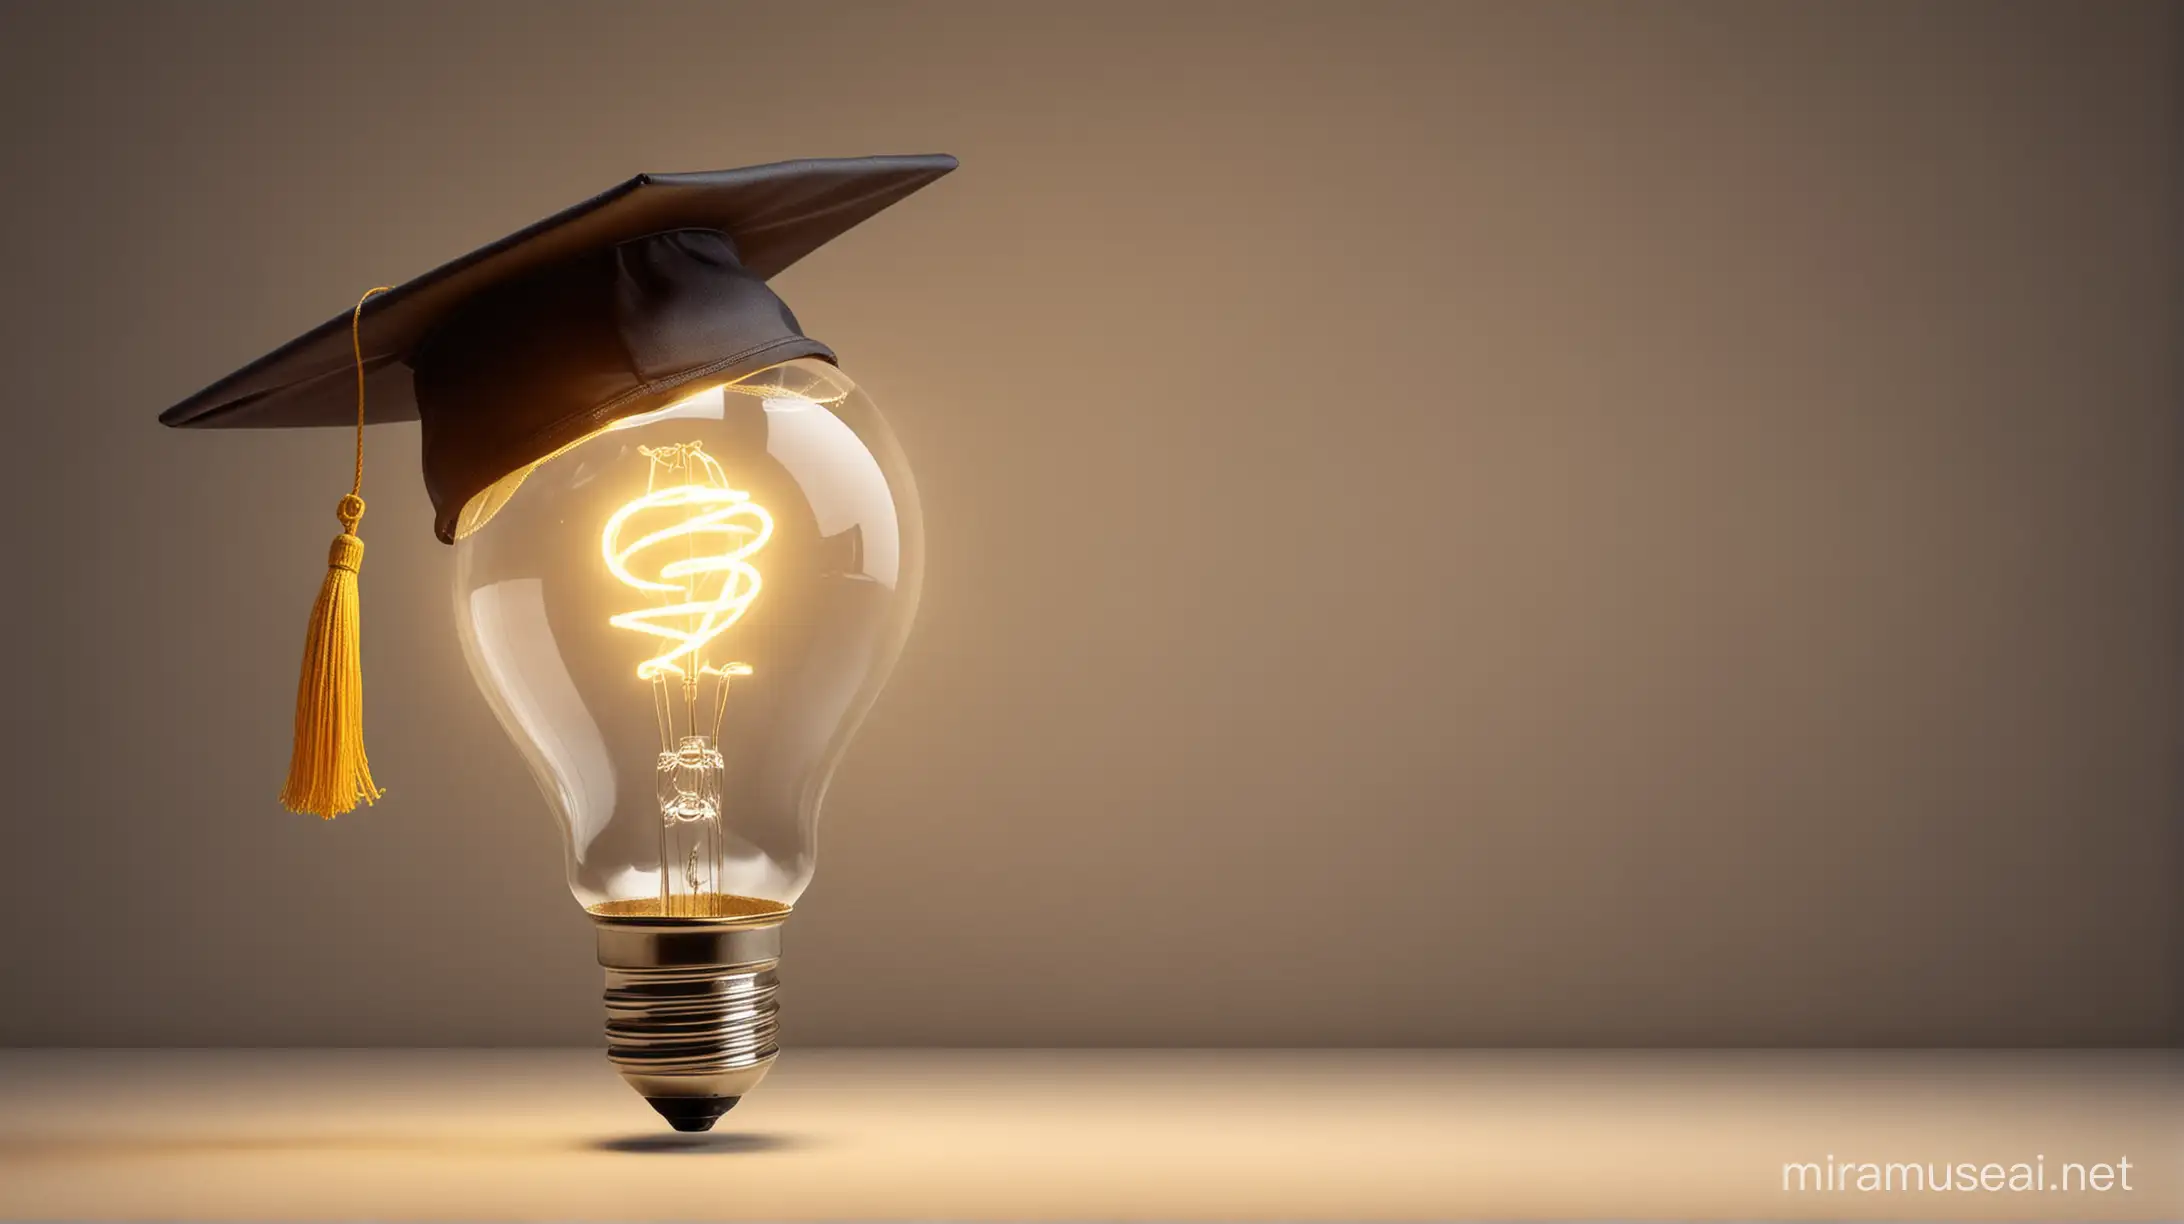 Glowing Light Bulb with Graduation Cap Symbol of Education